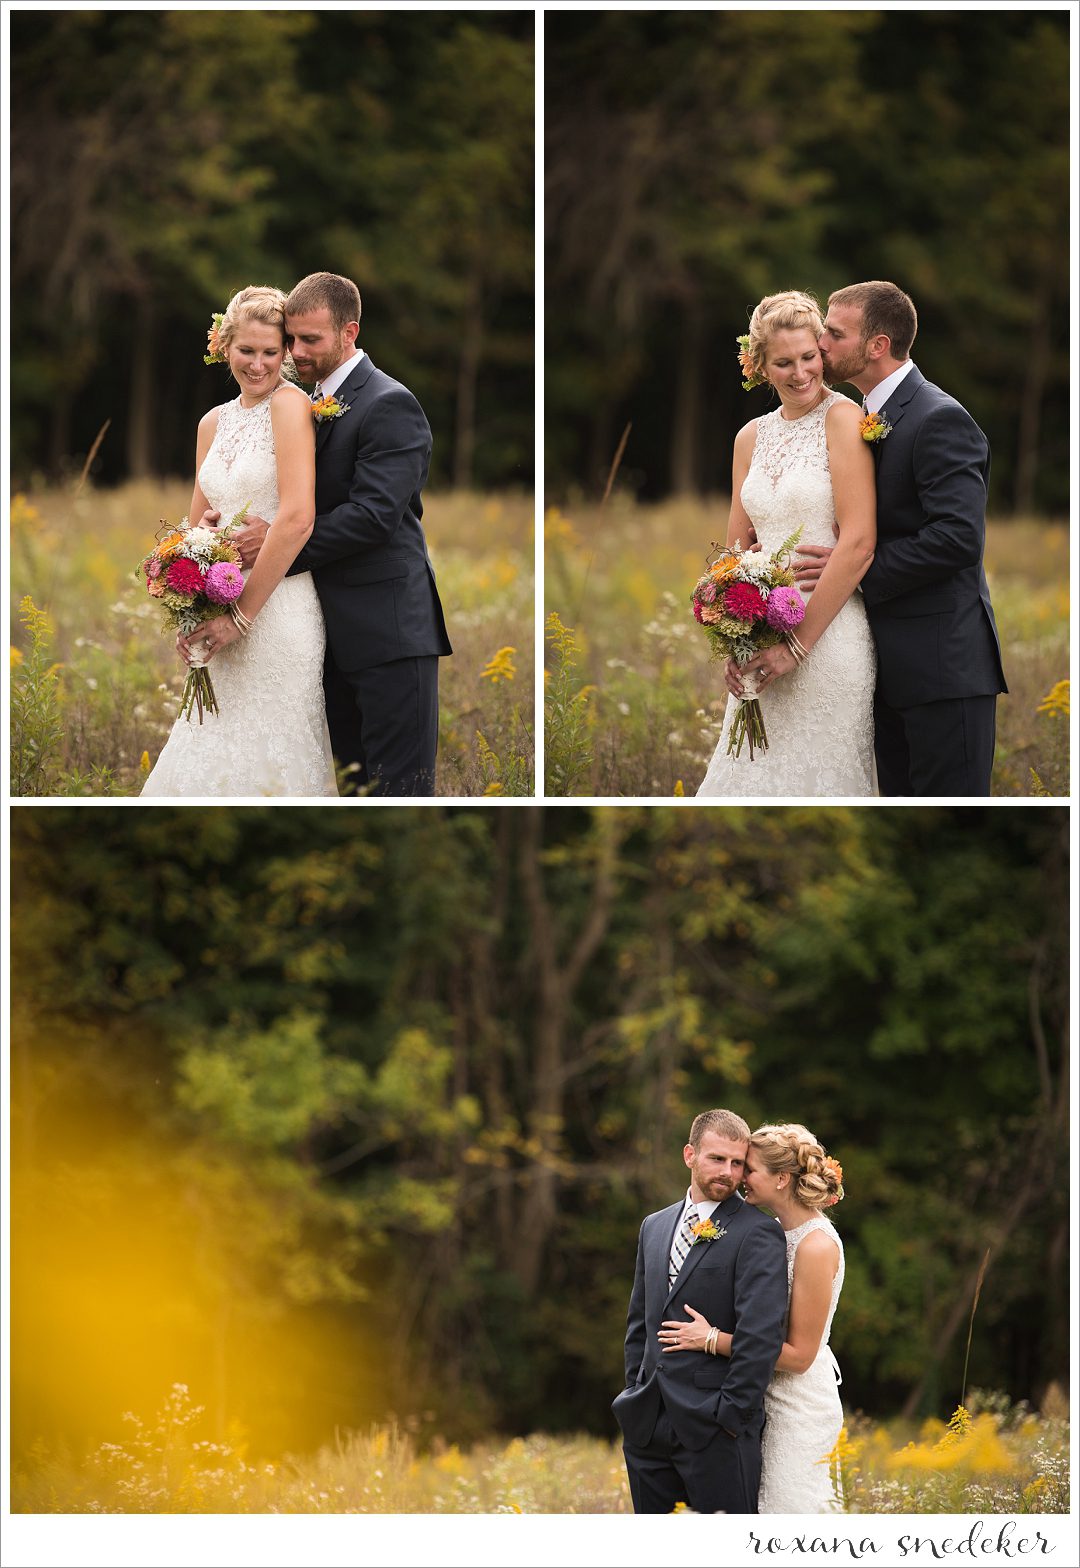 Wedding-photographer-K&S-farms-Sheridan-Indy-Indianapolis-barn-outdoor-rustic-photographer-_0021